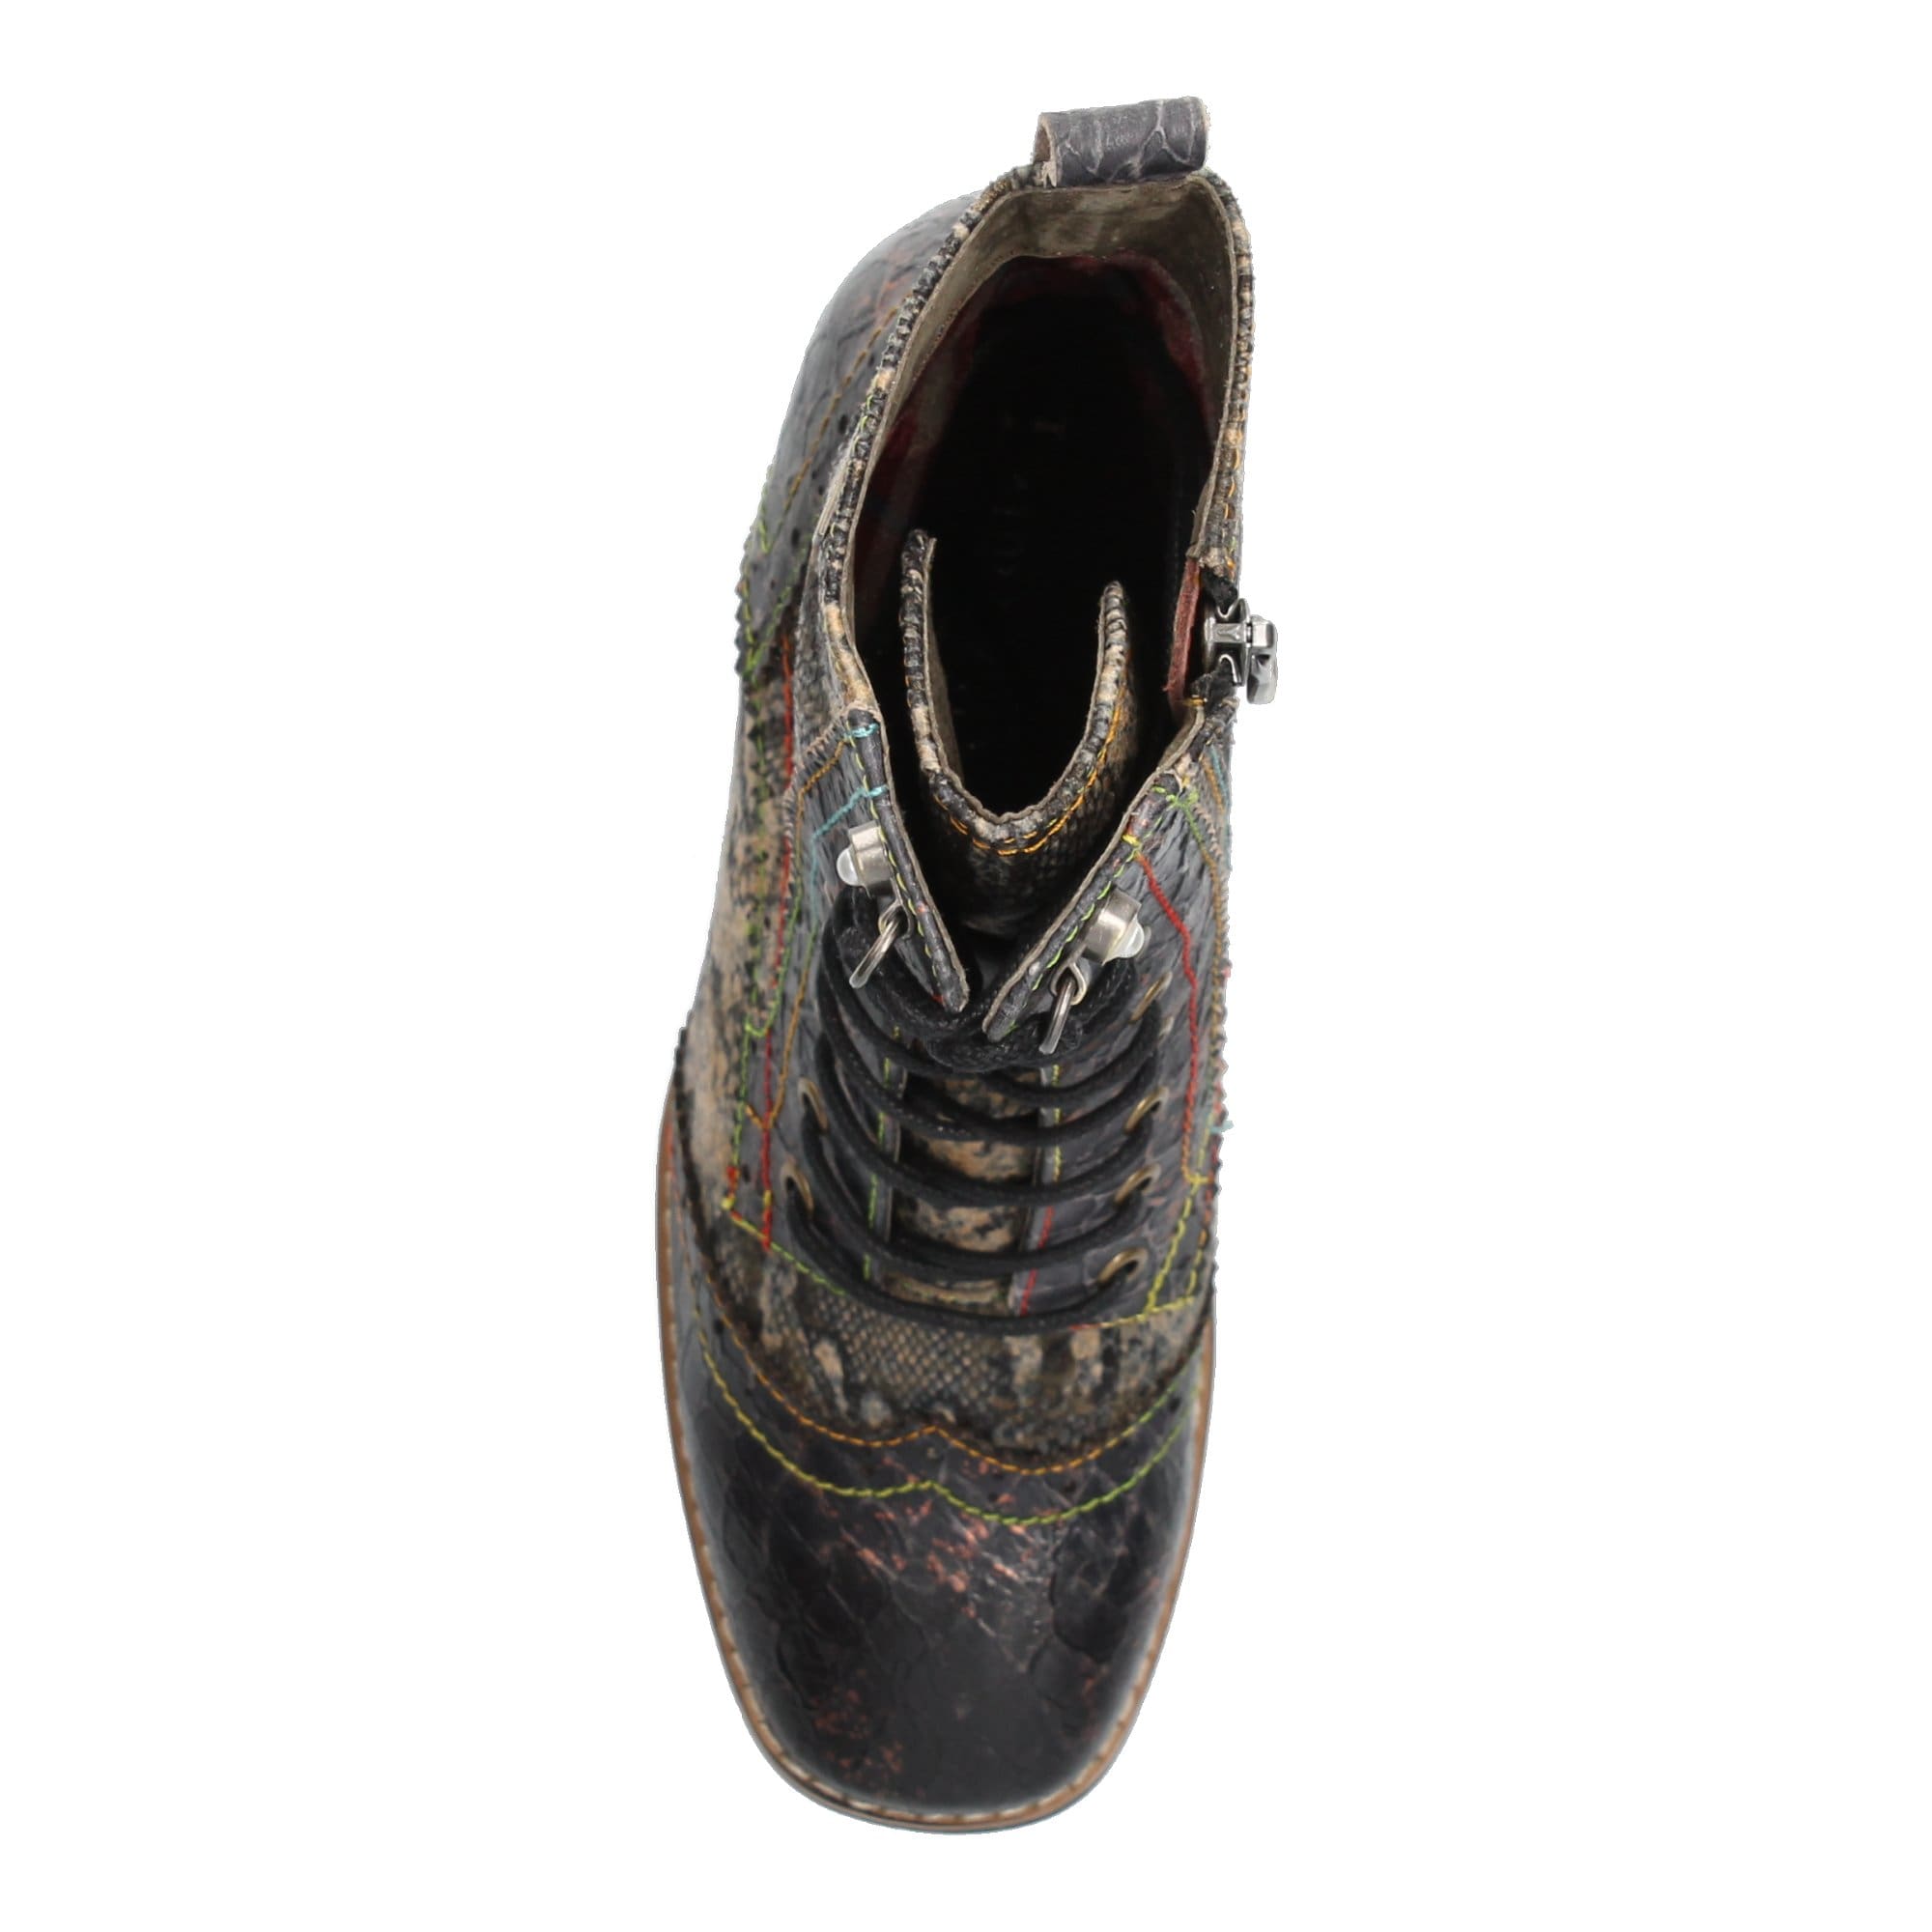 Chaussure KELLAO 02 - Boots